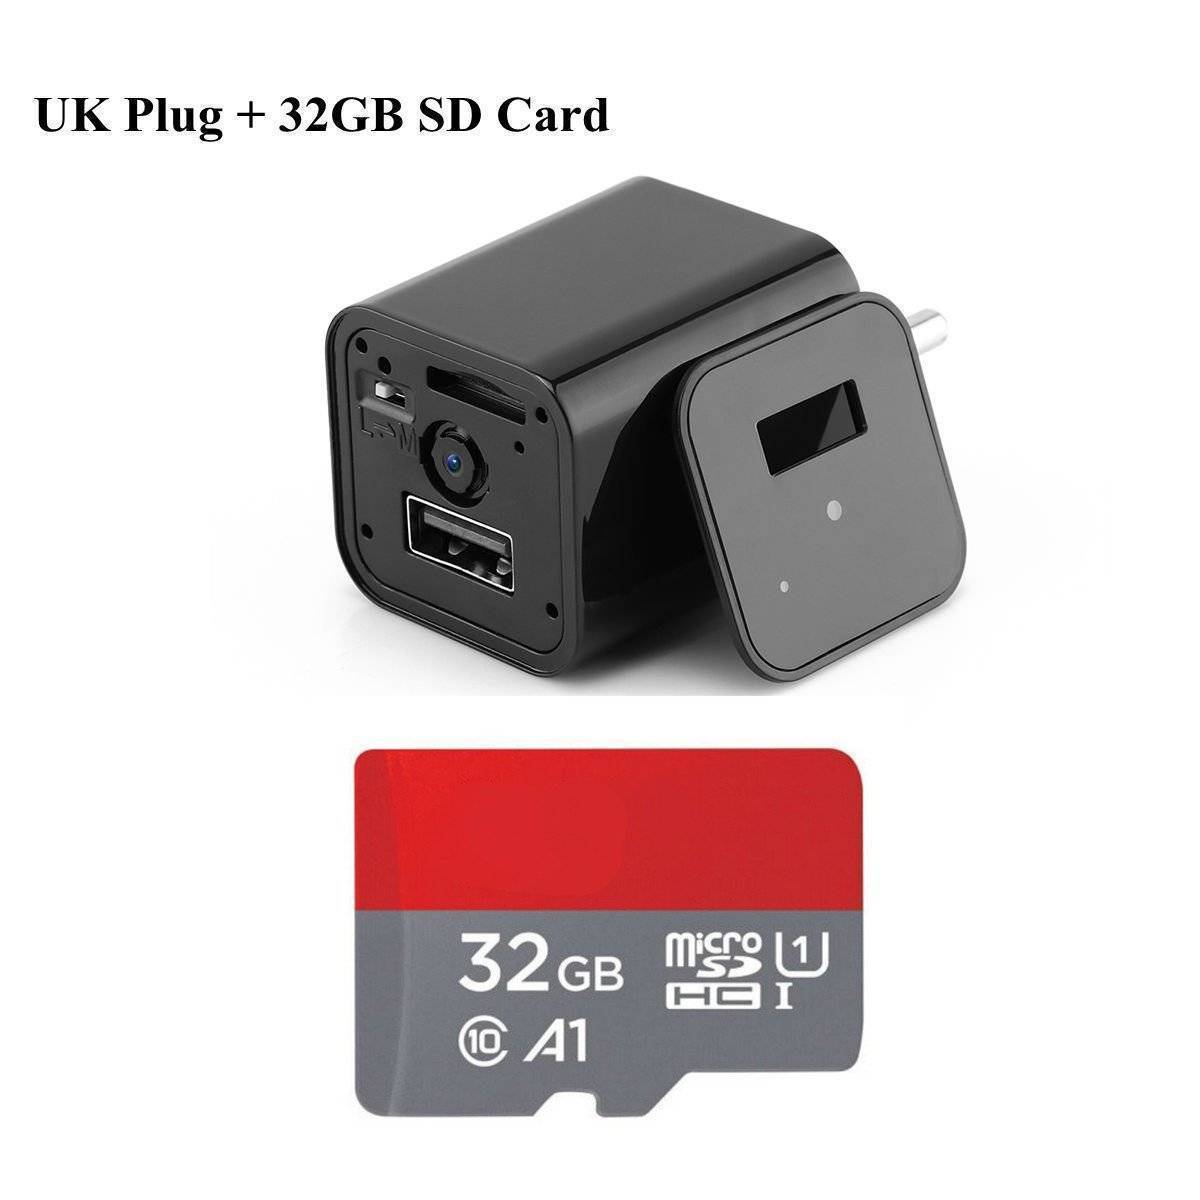 HD 1080P USB Wall Charger Video Camera - US Version